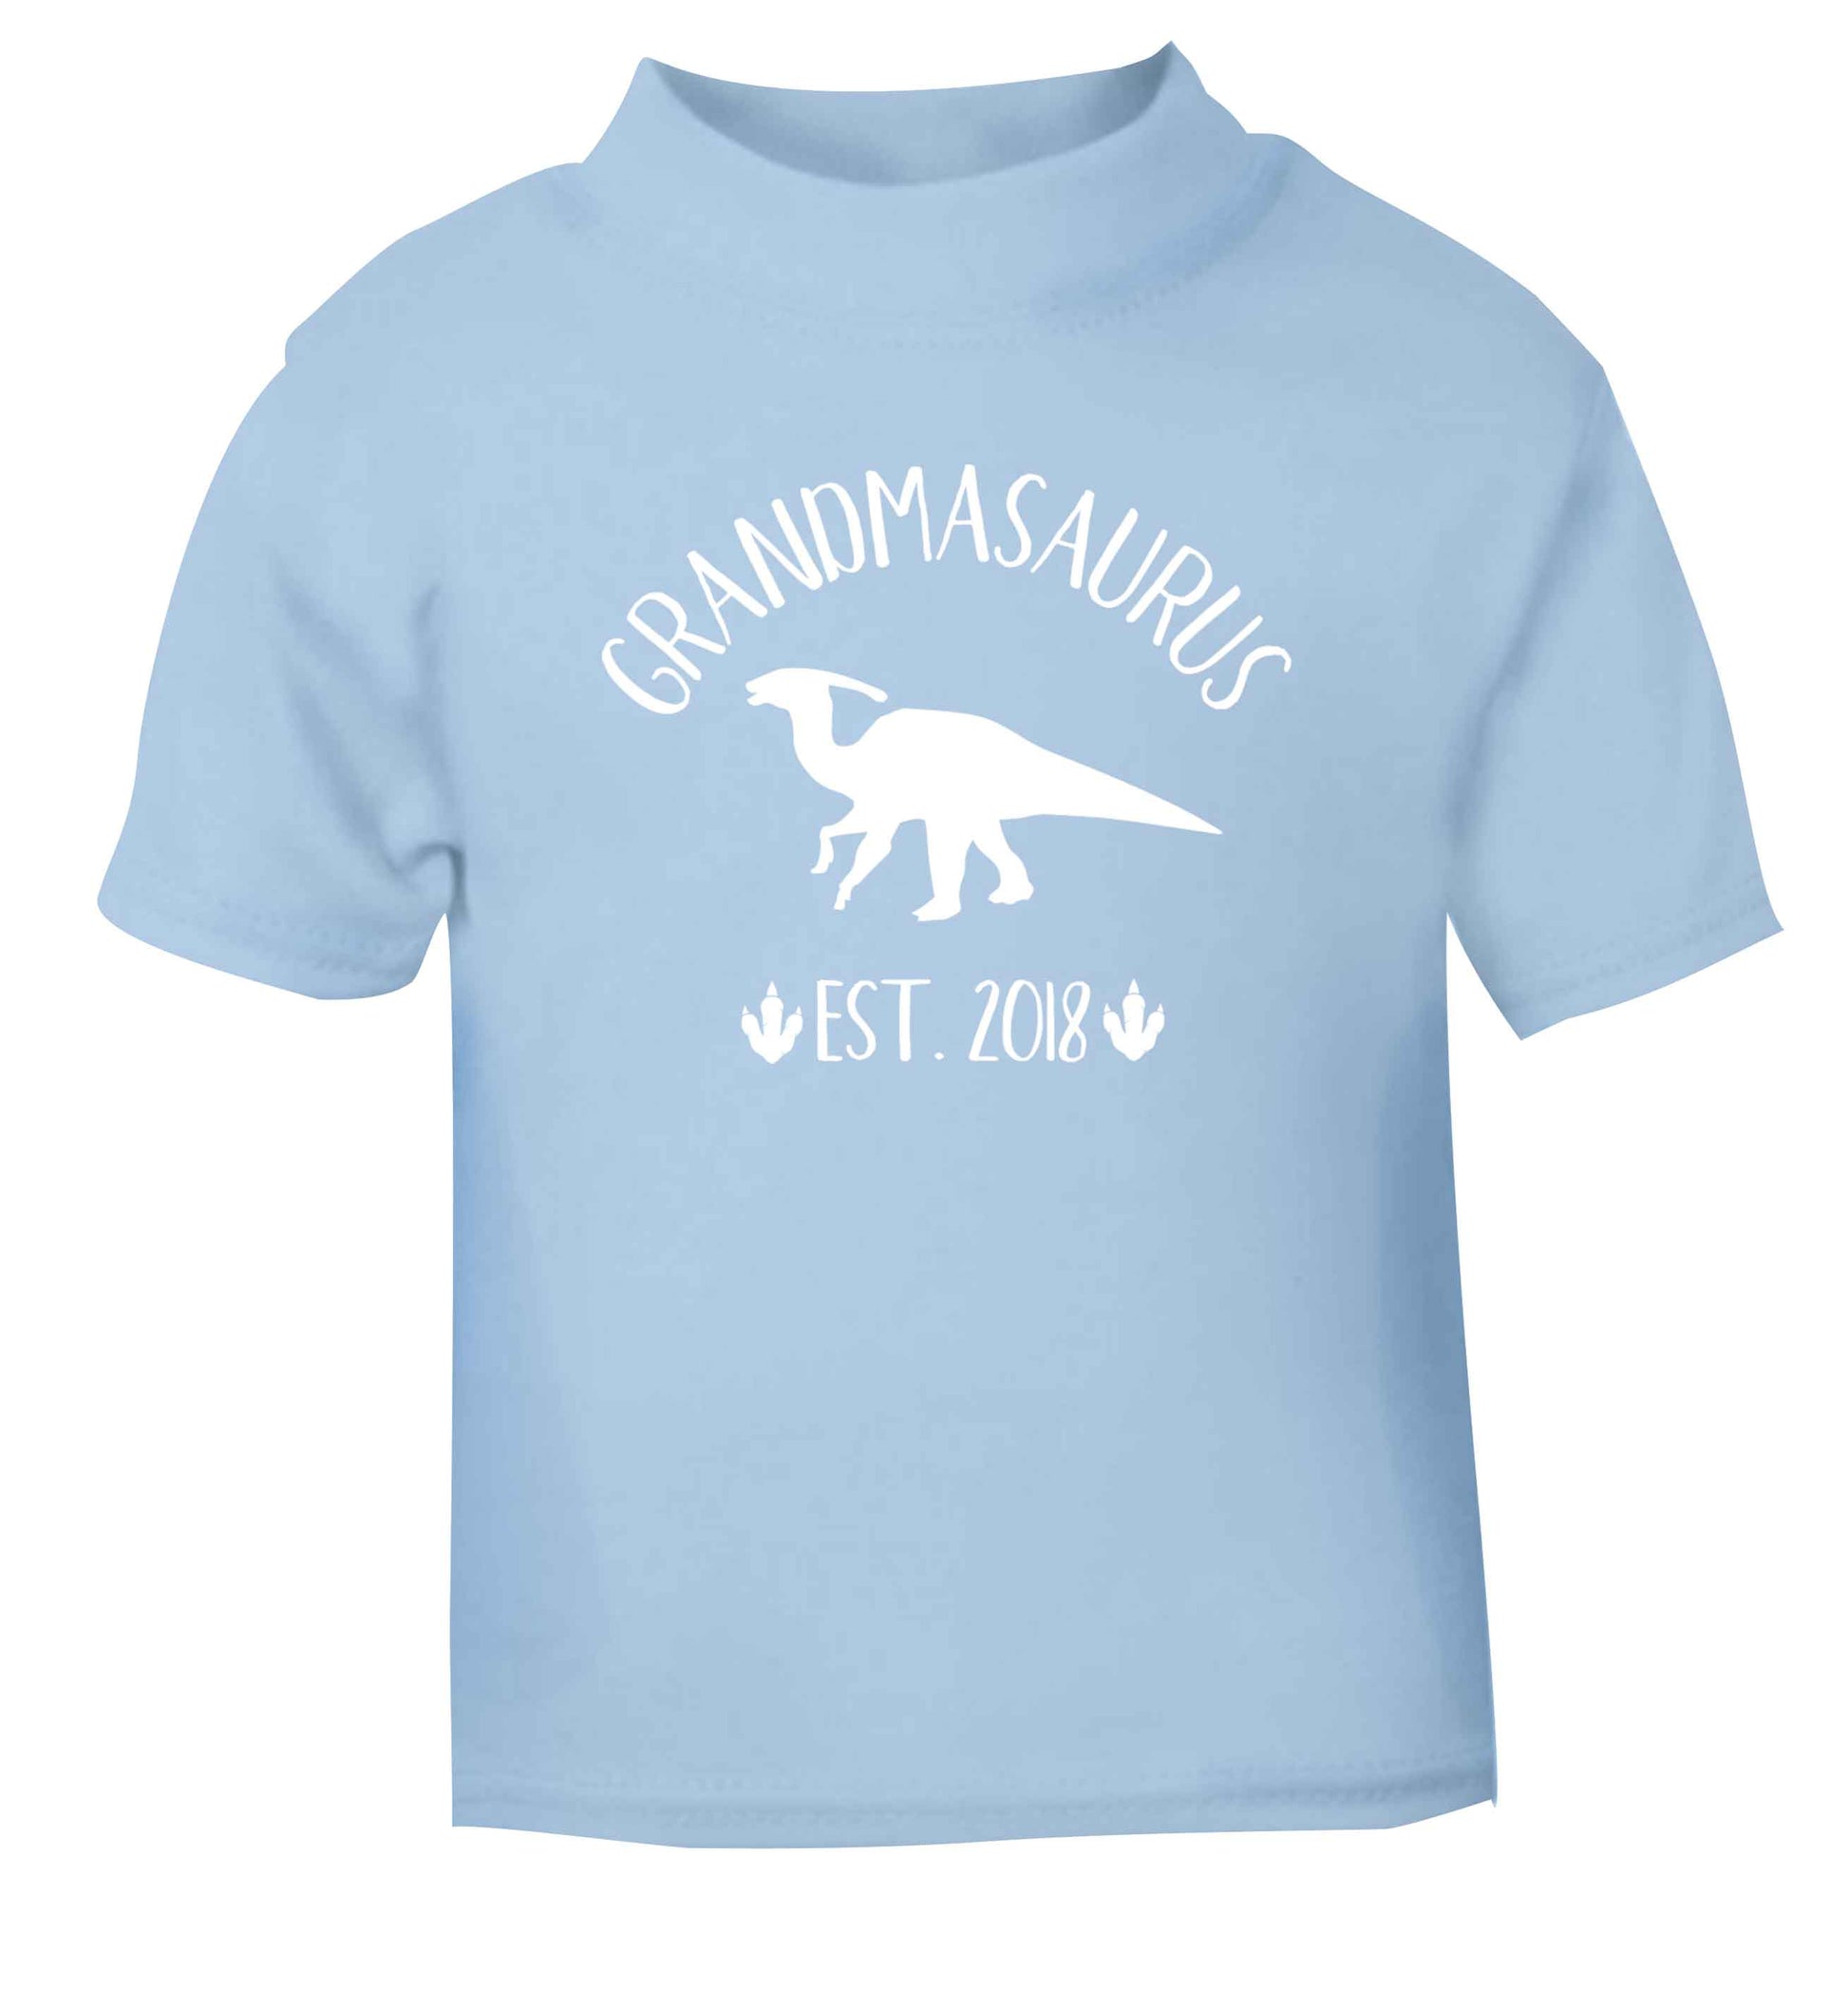 Personalised grandmasaurus since (custom date) light blue Baby Toddler Tshirt 2 Years